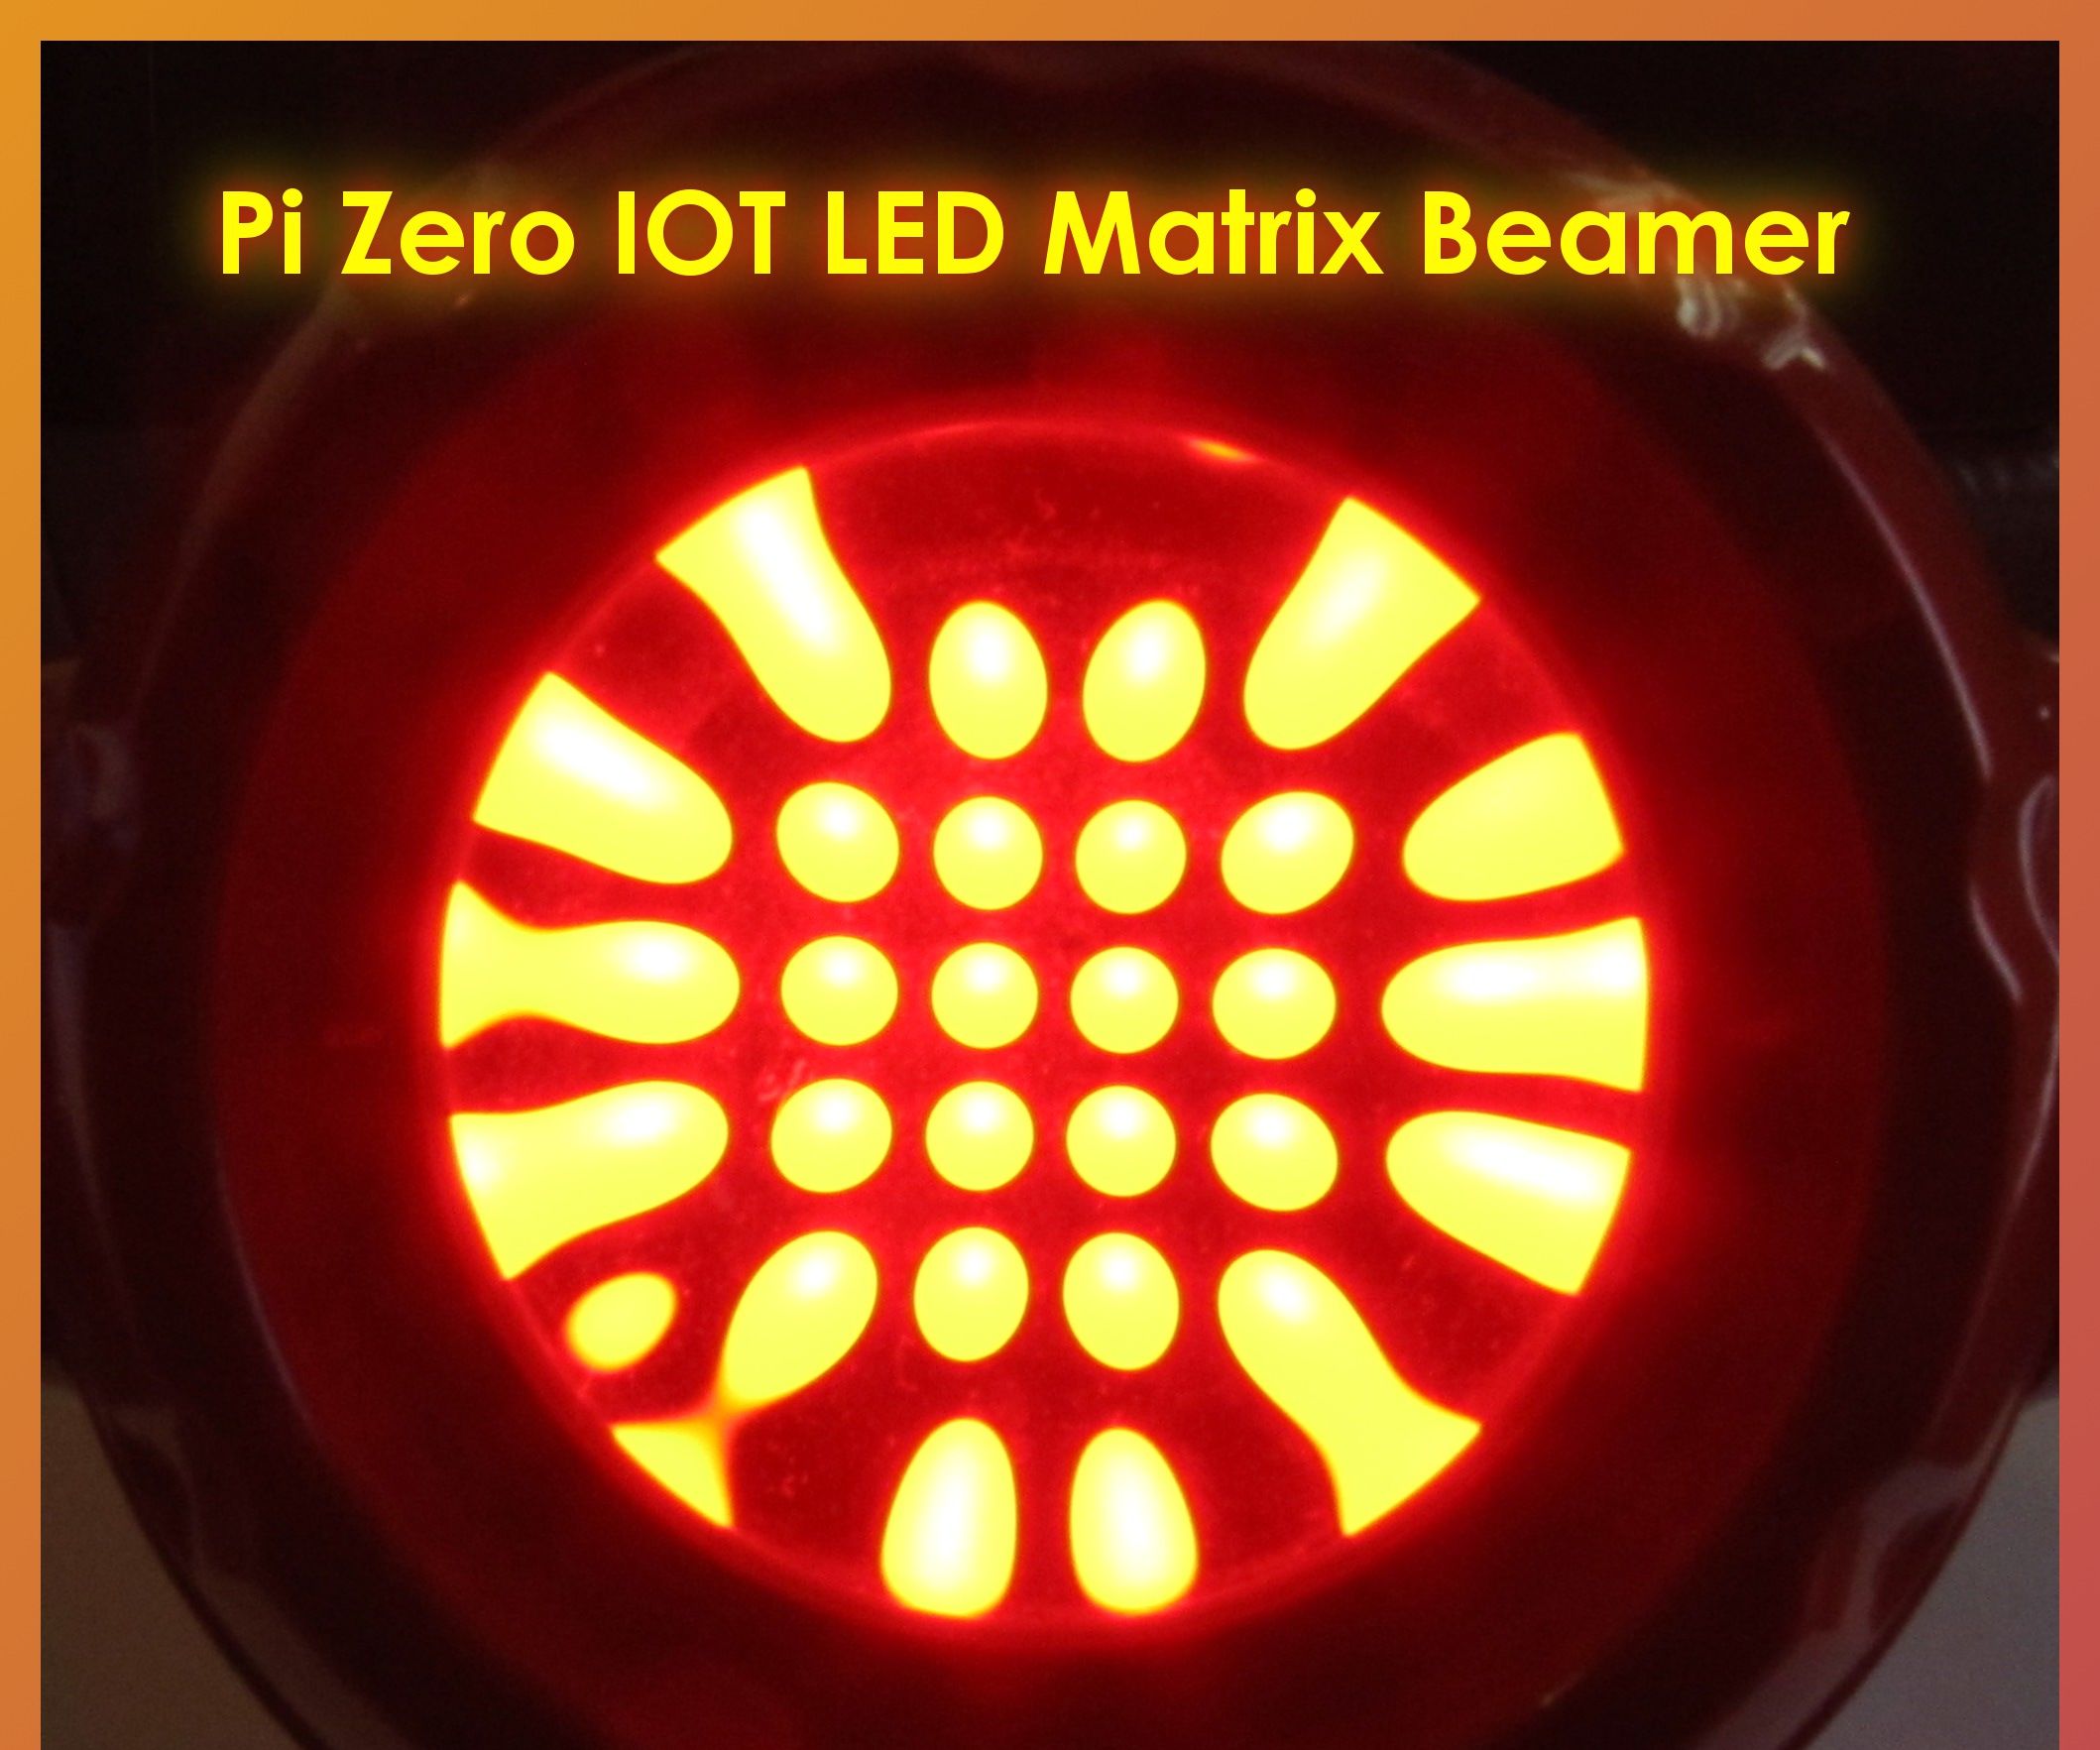 Pi Zero IOT Led Matrix Beamer- a Message on the Wall